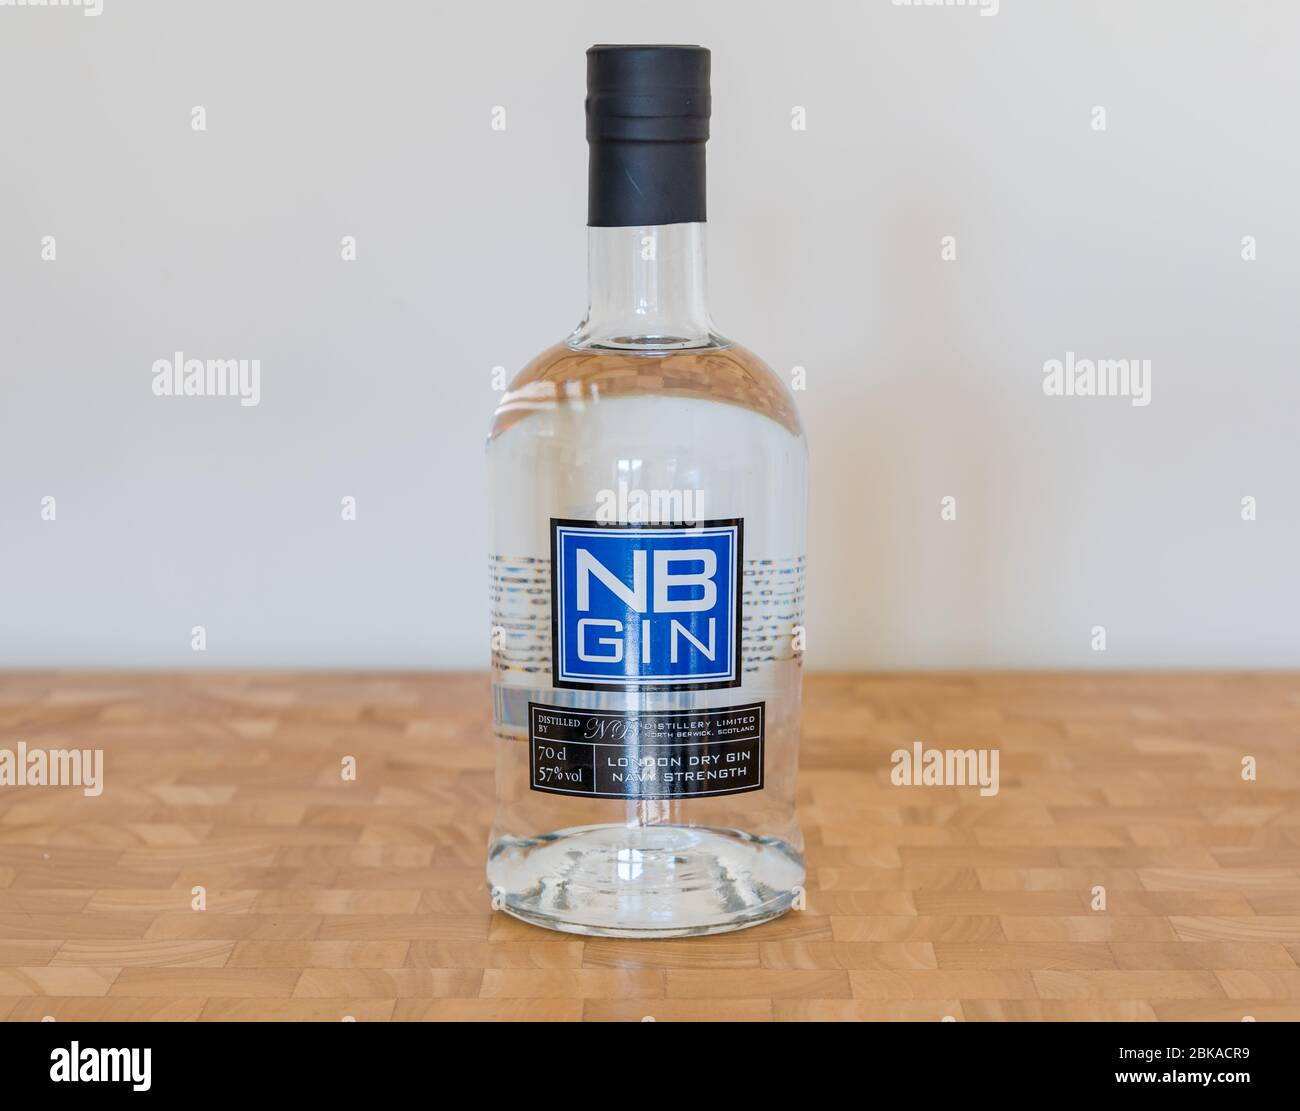 NB gin o North Berwick London Dry gin bottle marina Strength Foto Stock